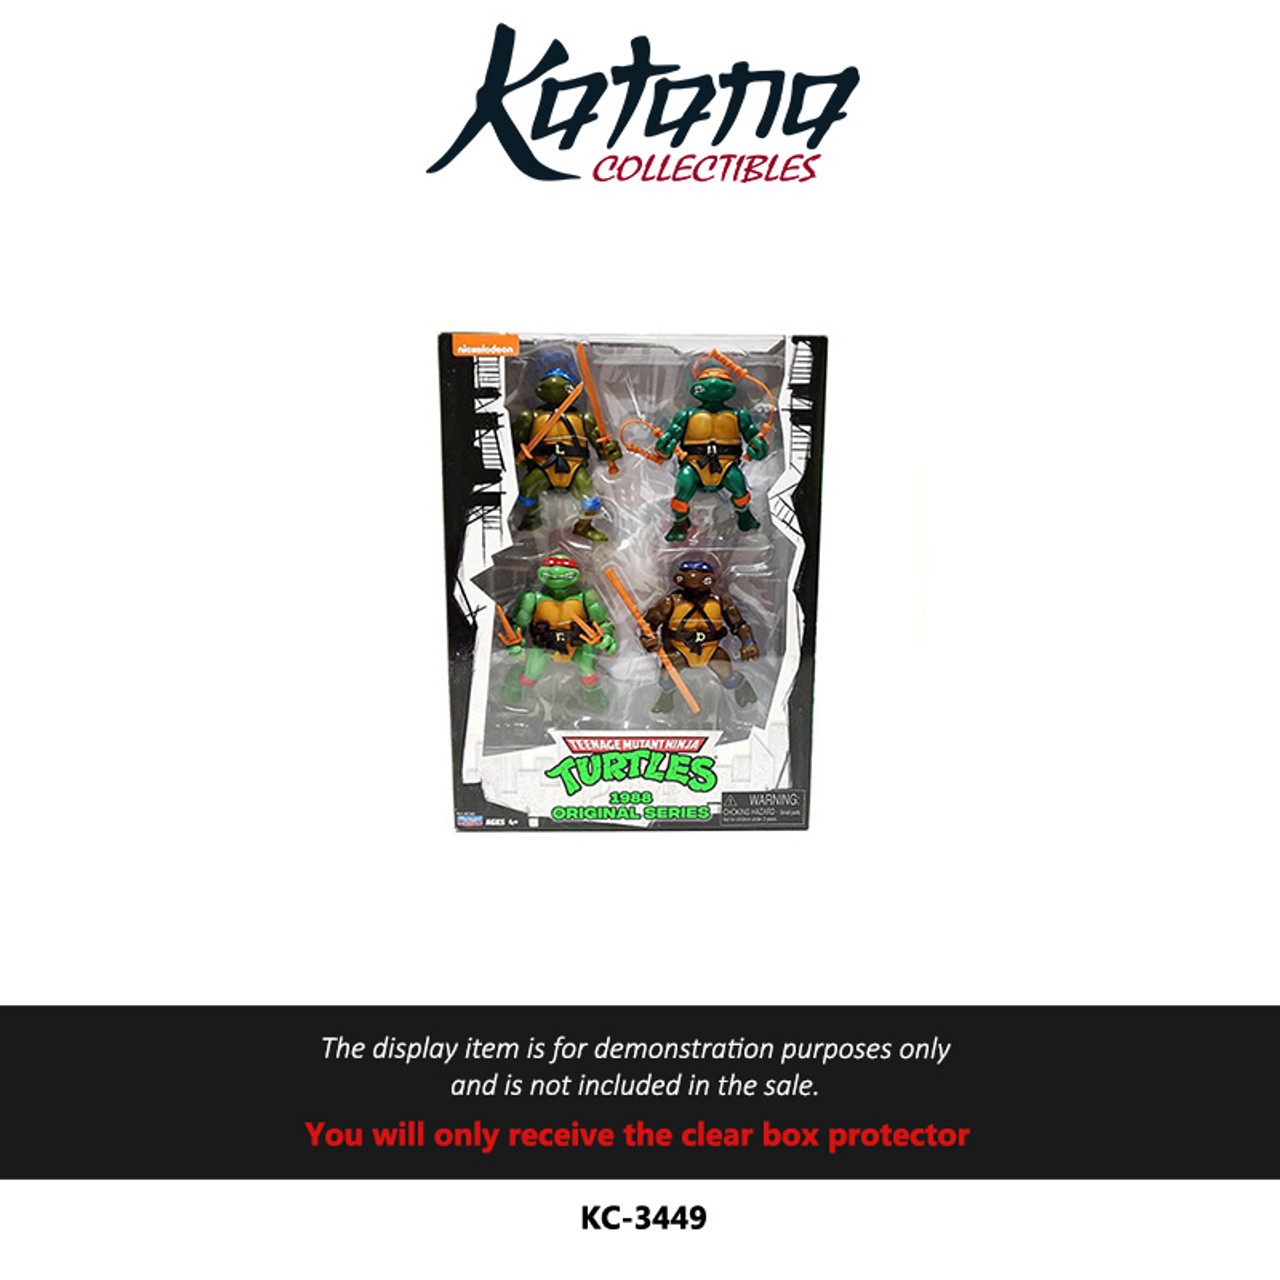 Katana Collectibles Protector For Teenage Mutant Ninja Turtles Original 1988 4-Pack Figures